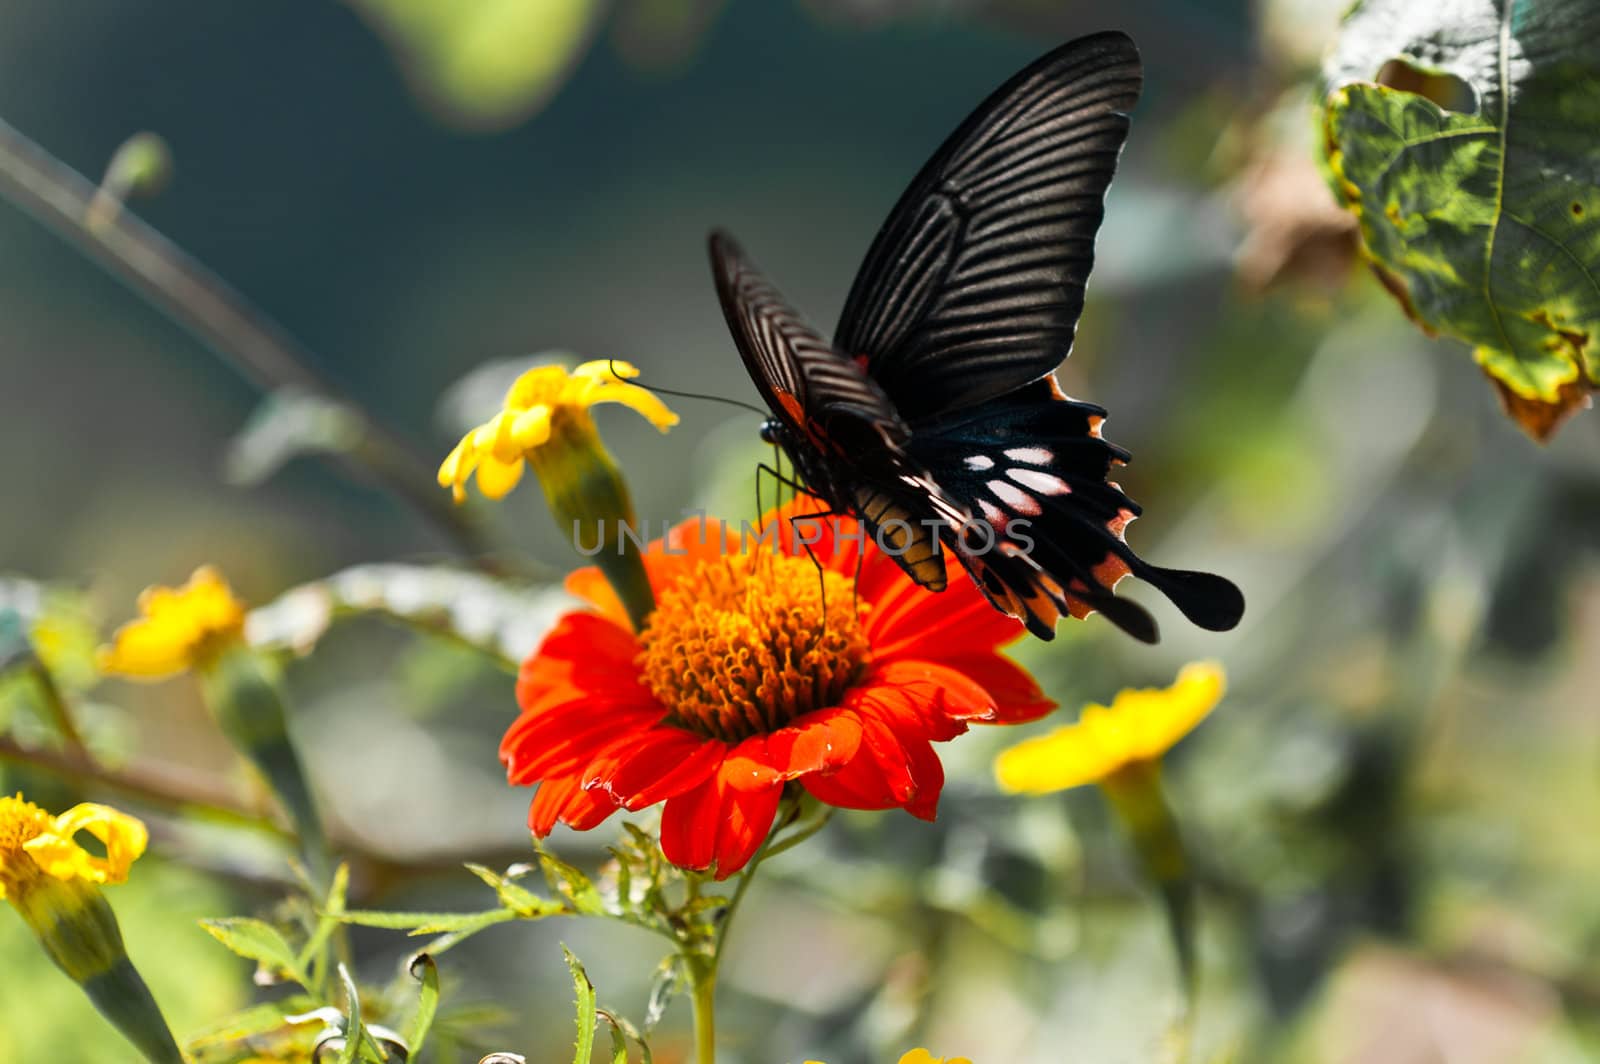 Eastern Tiger Swallowtail by oguzdkn